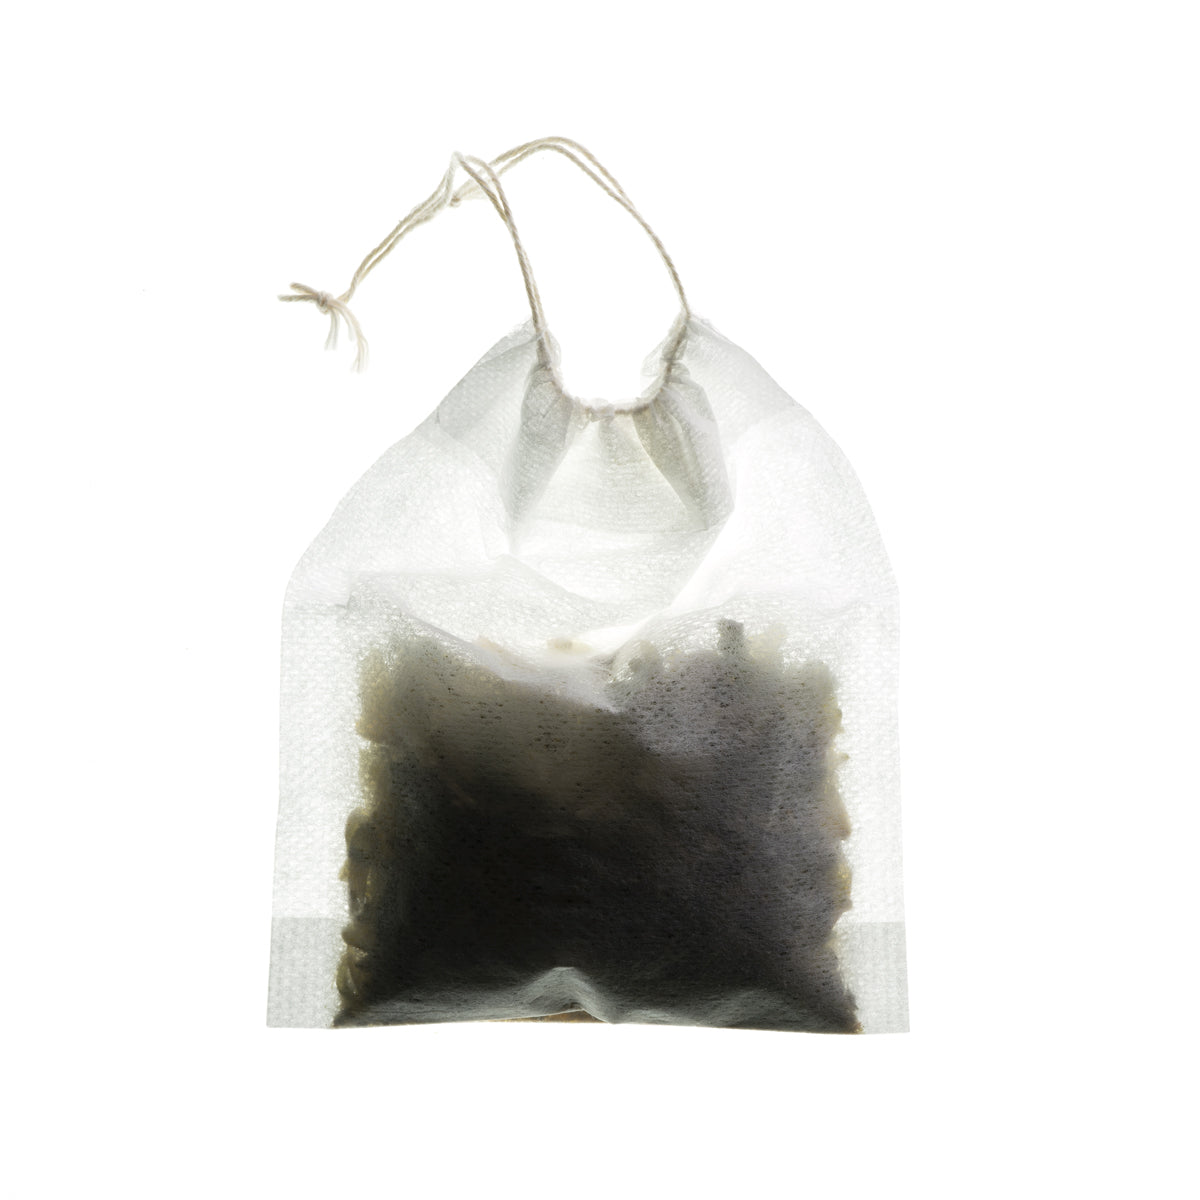 Single tea bag of DREAM 11PM by noosha